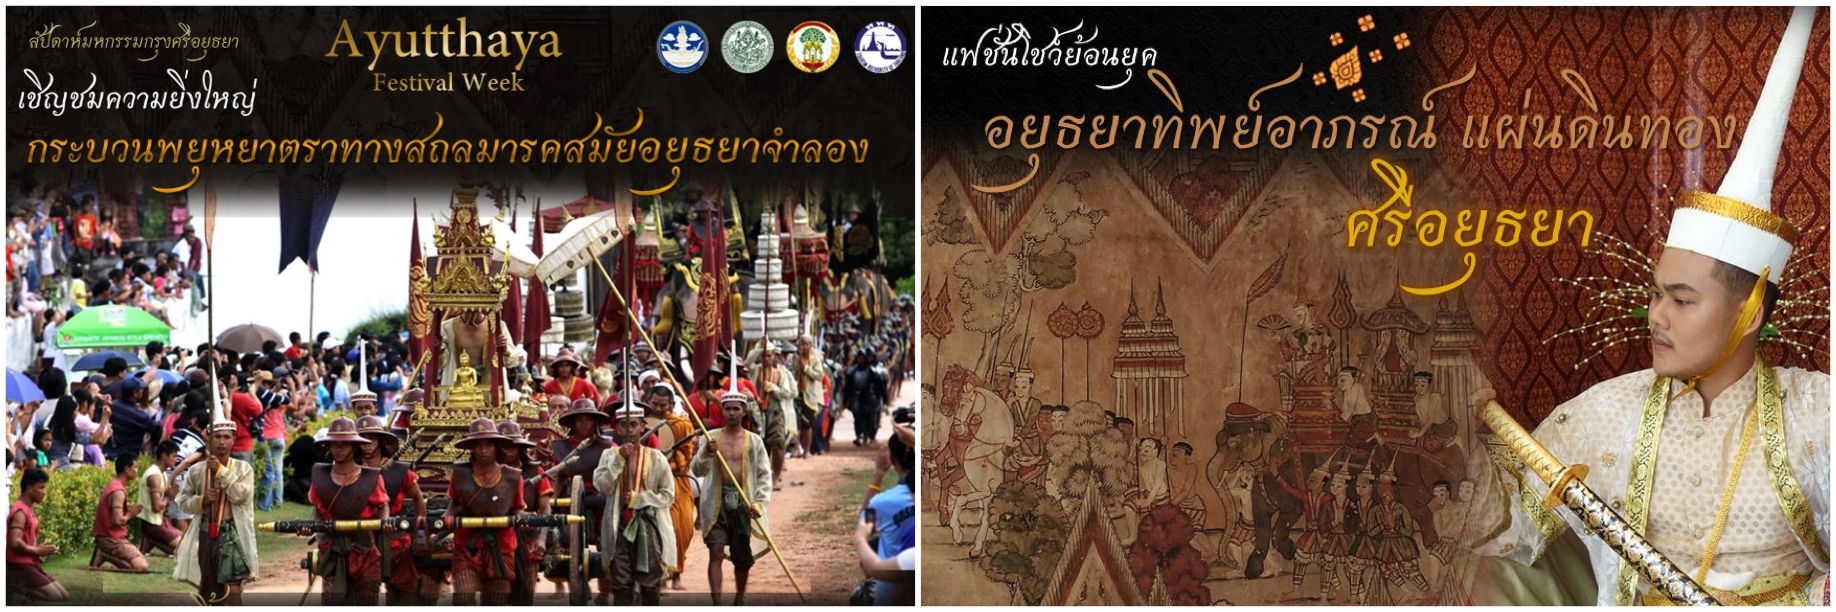 AyutthayaHistoricalFestival2019Montage1